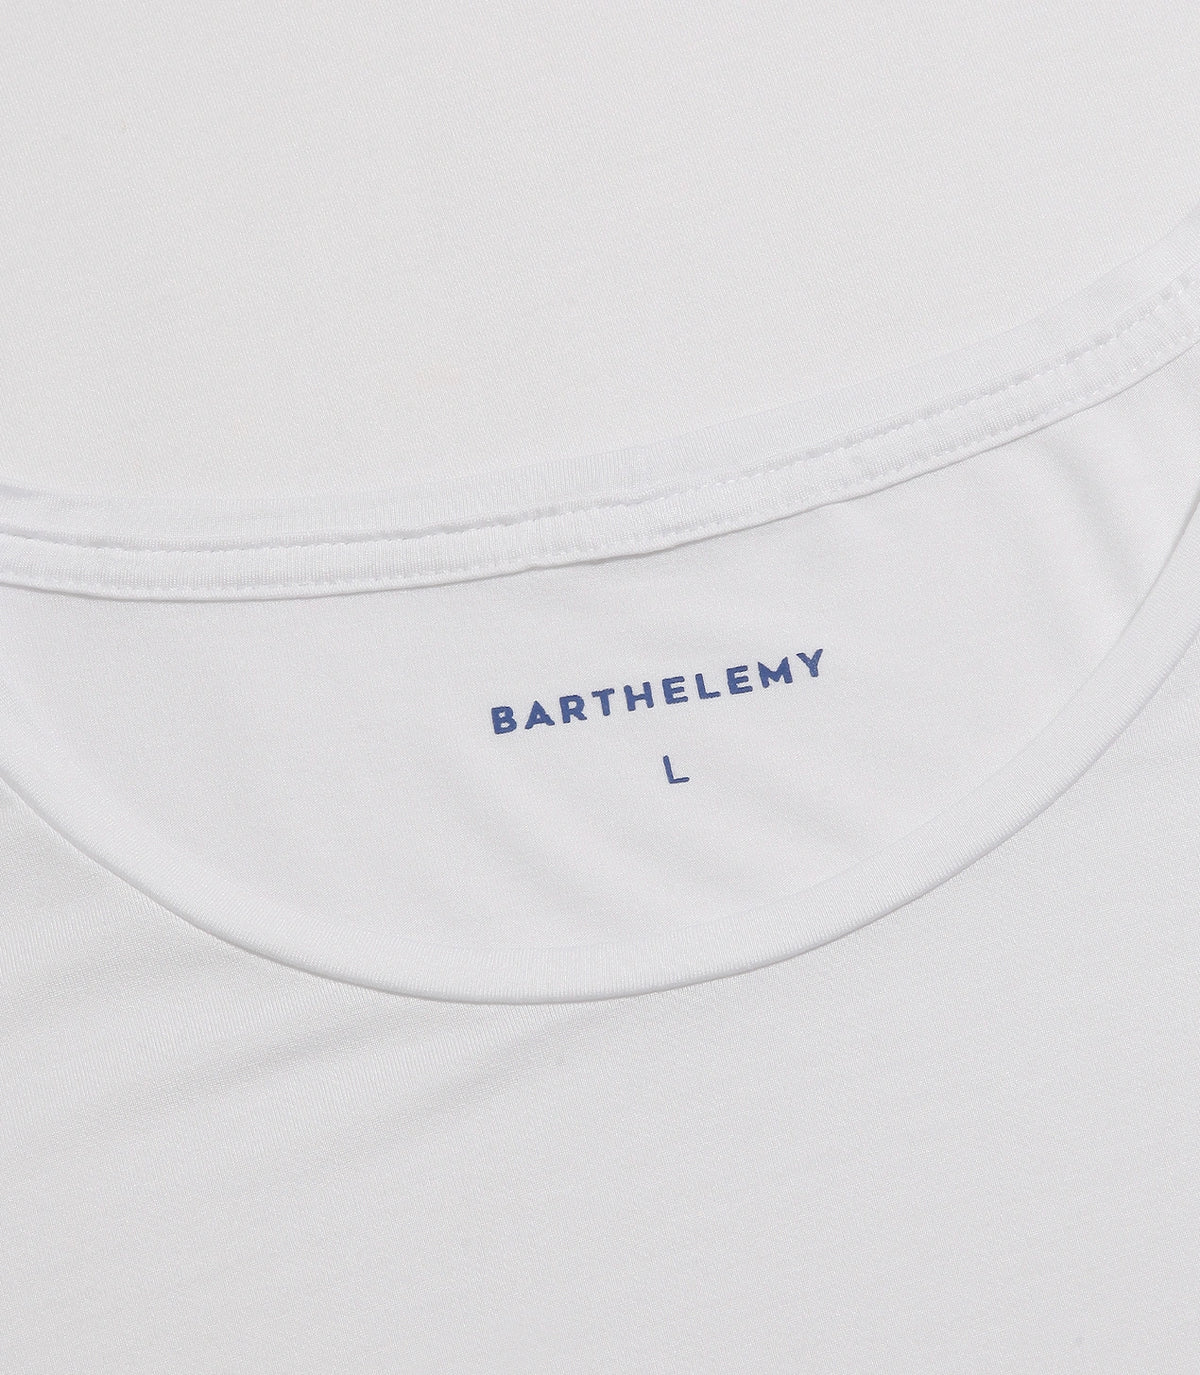 Bio T-Shirt White - Barthelemy